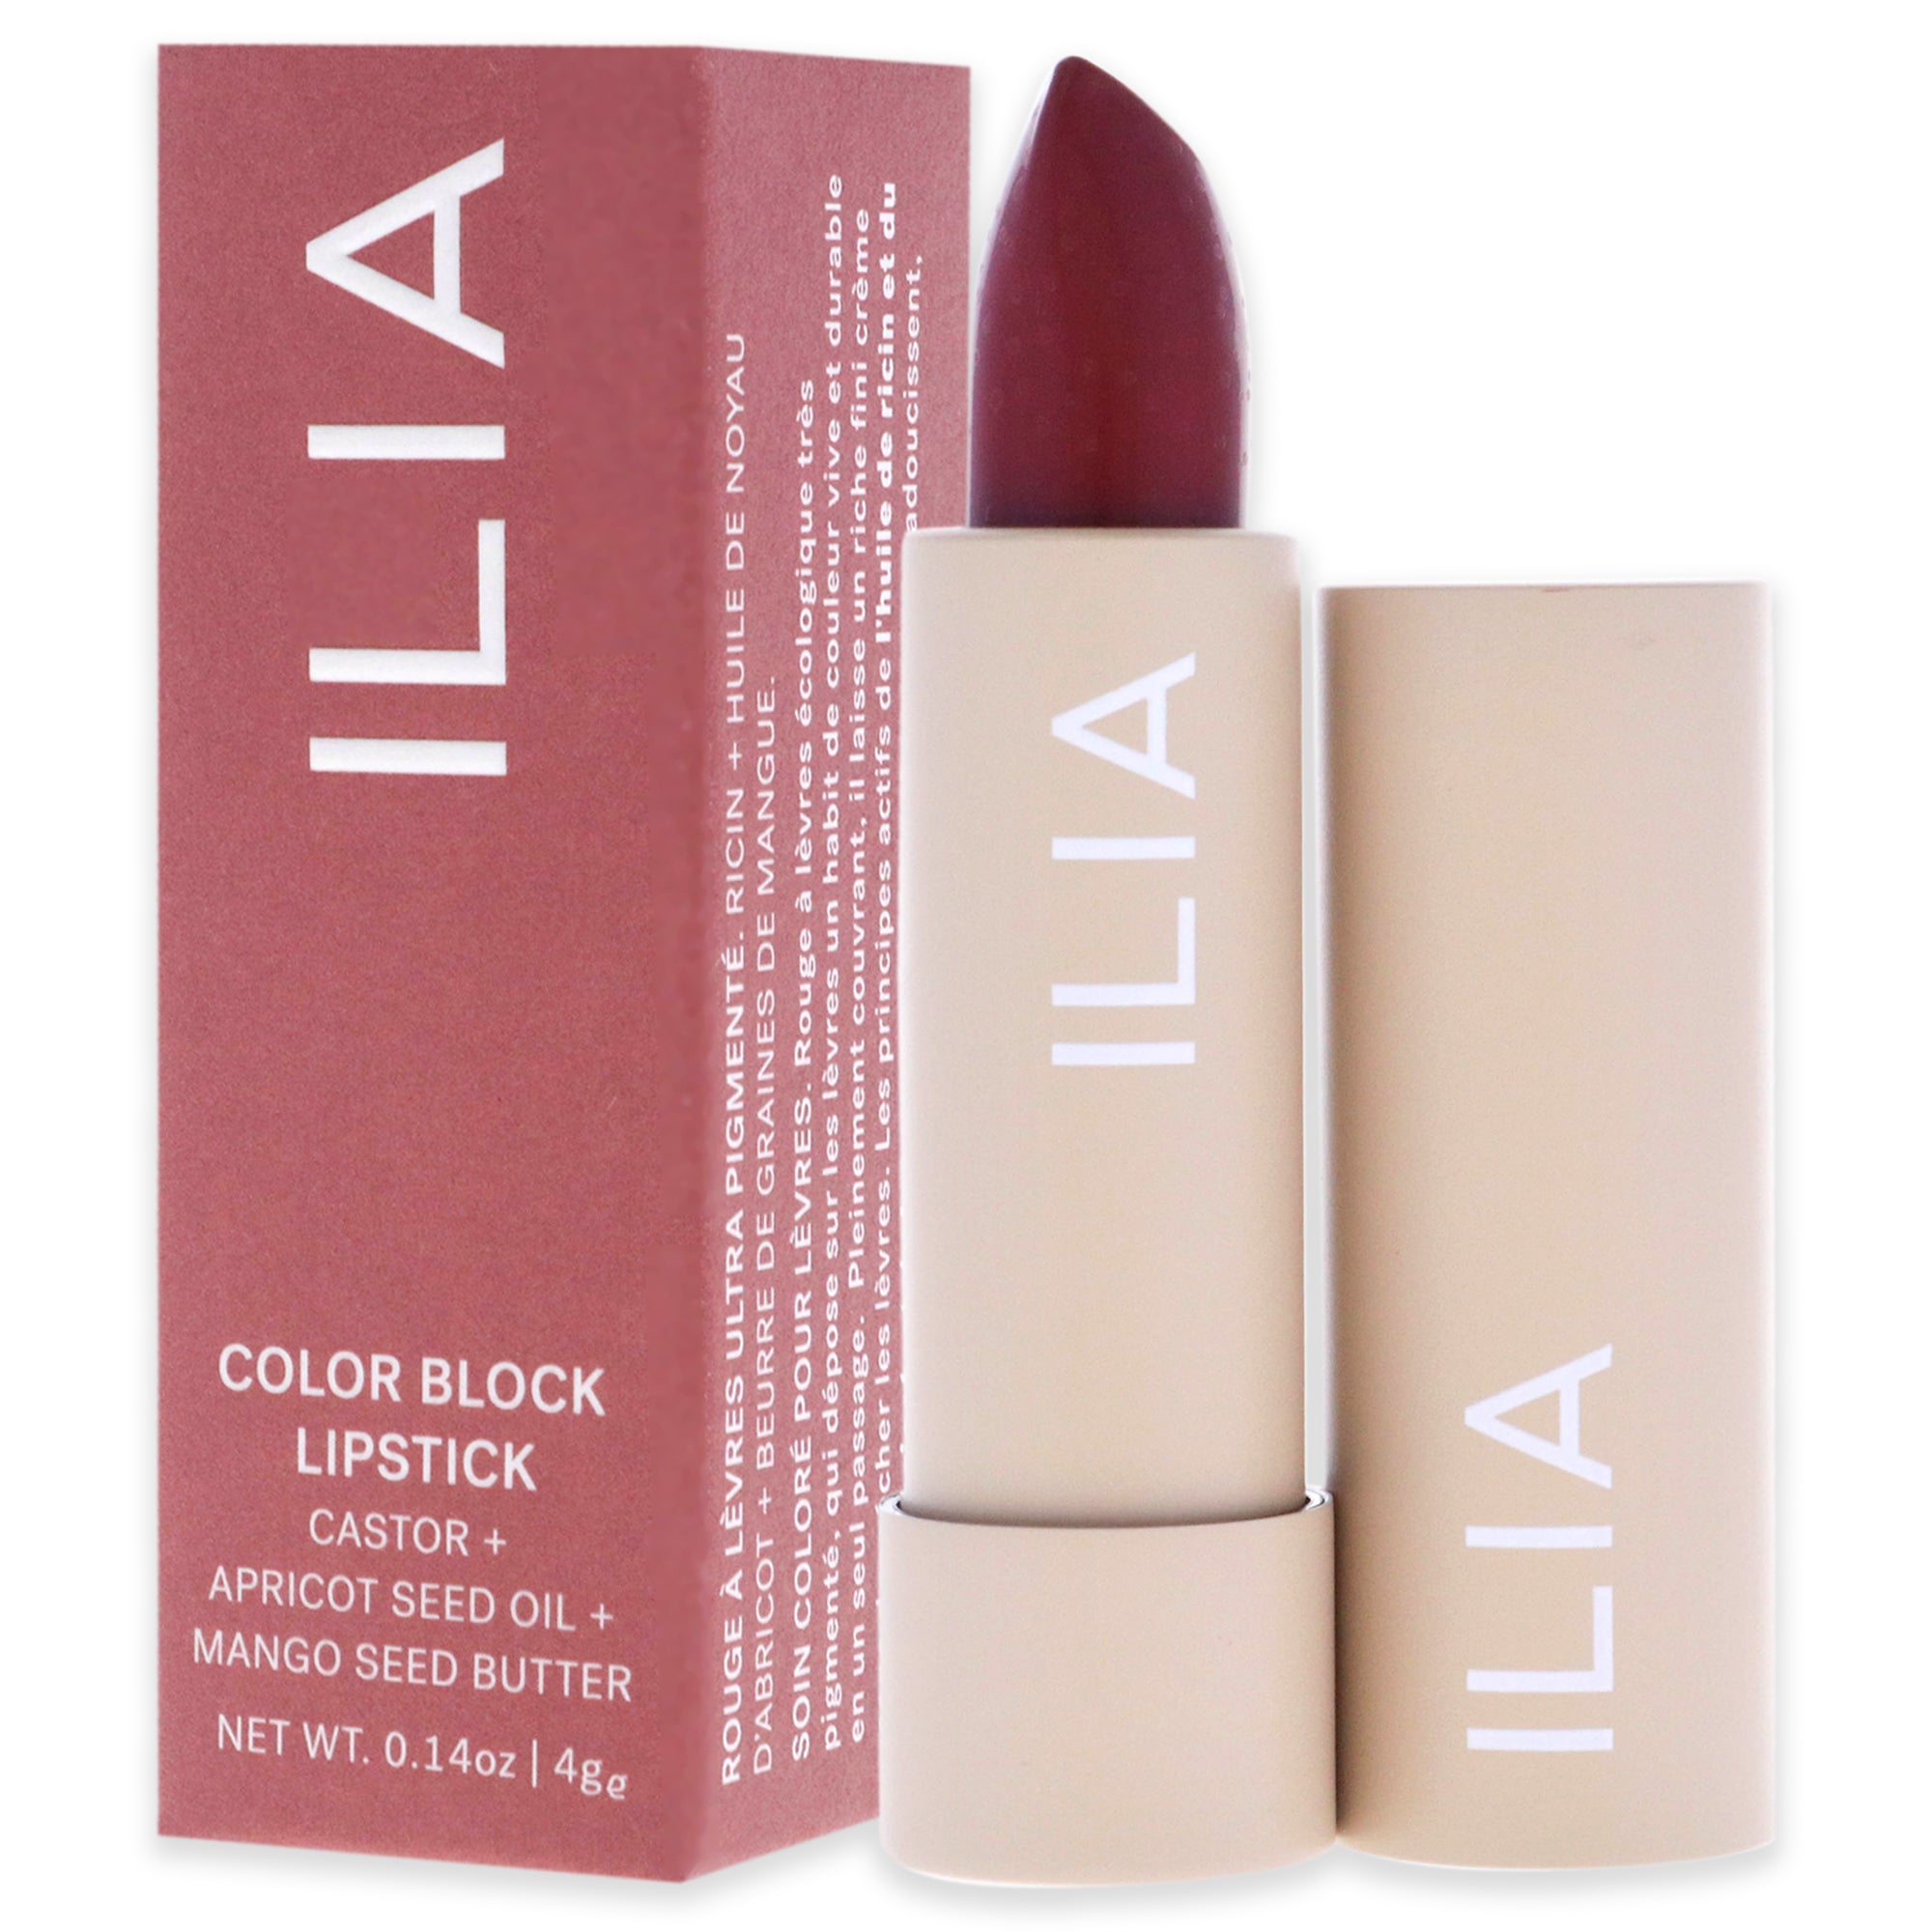 Color Block Lipstick - Rumba by ILIA Beauty for Women - 0.14 oz Lipstick